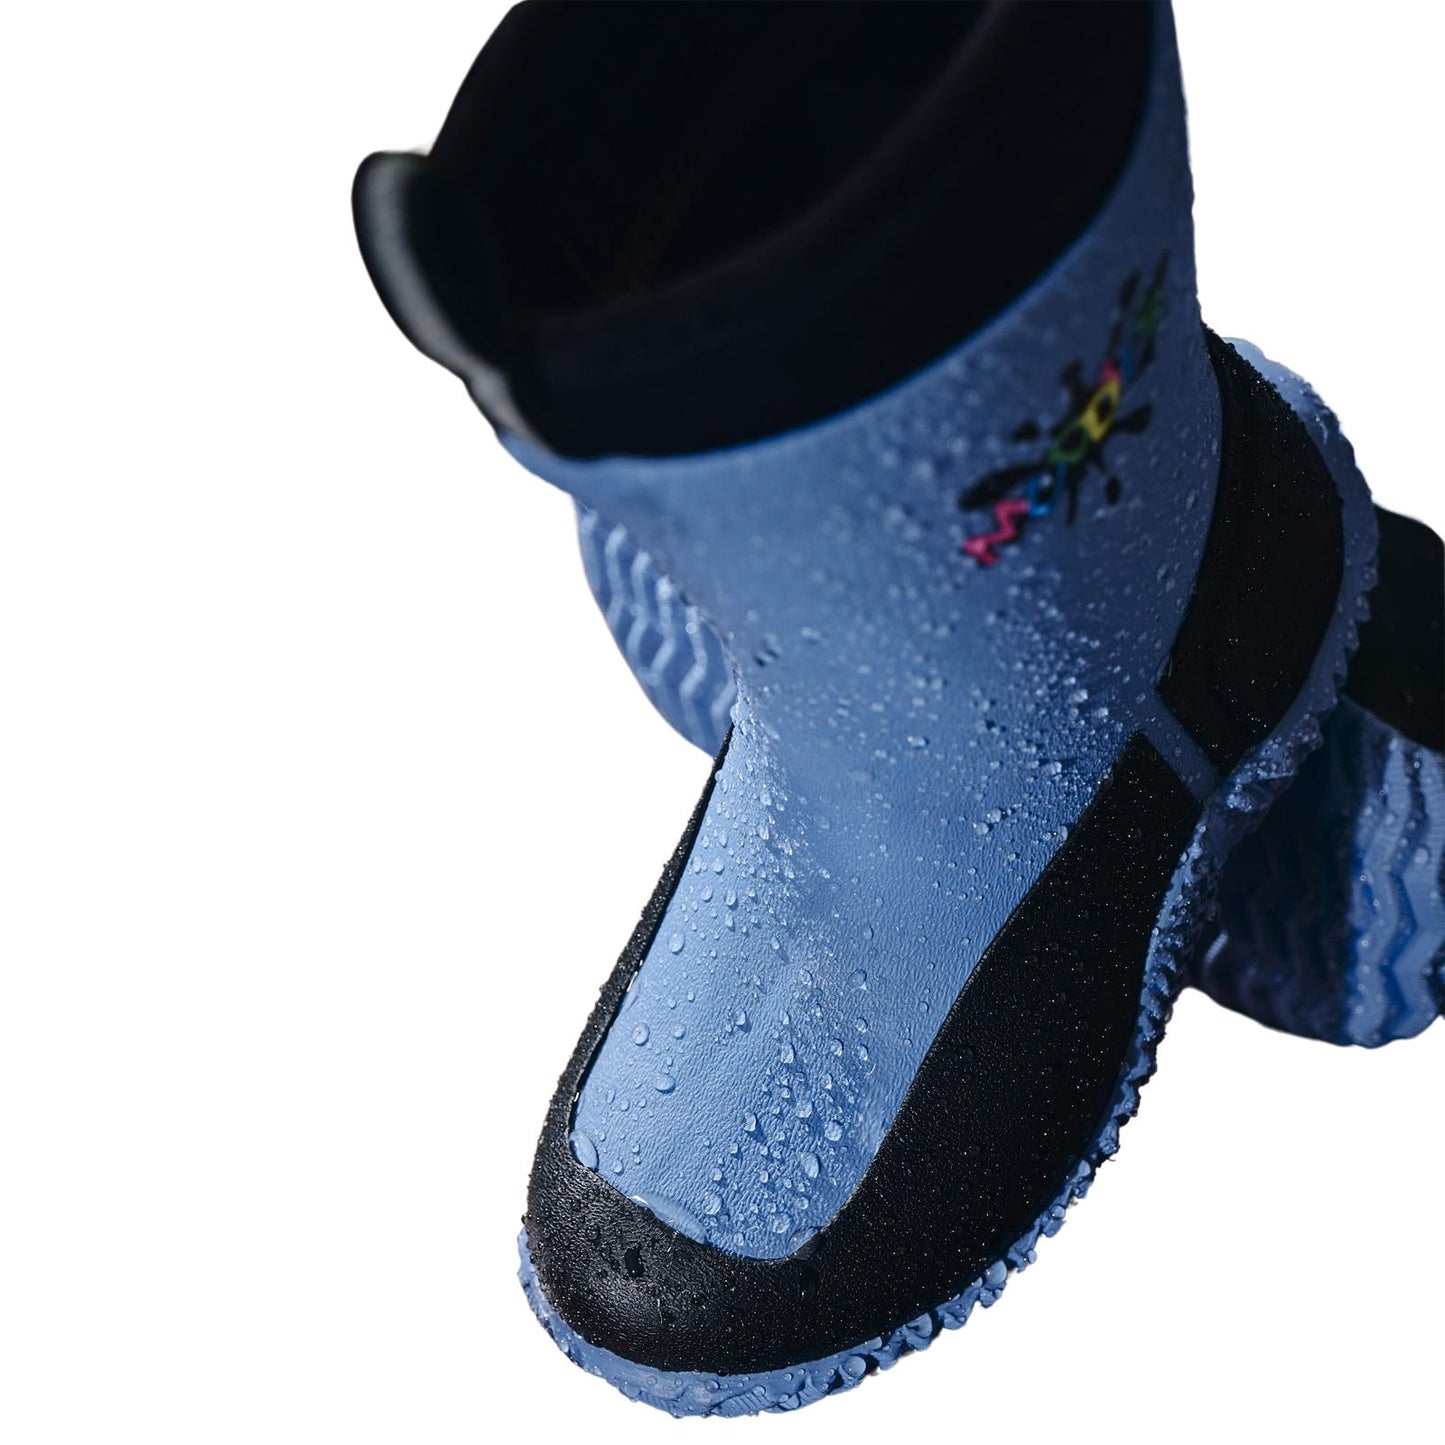 Muddies Icicle Blue Black Kids Warm Neoprene Wellies Boots